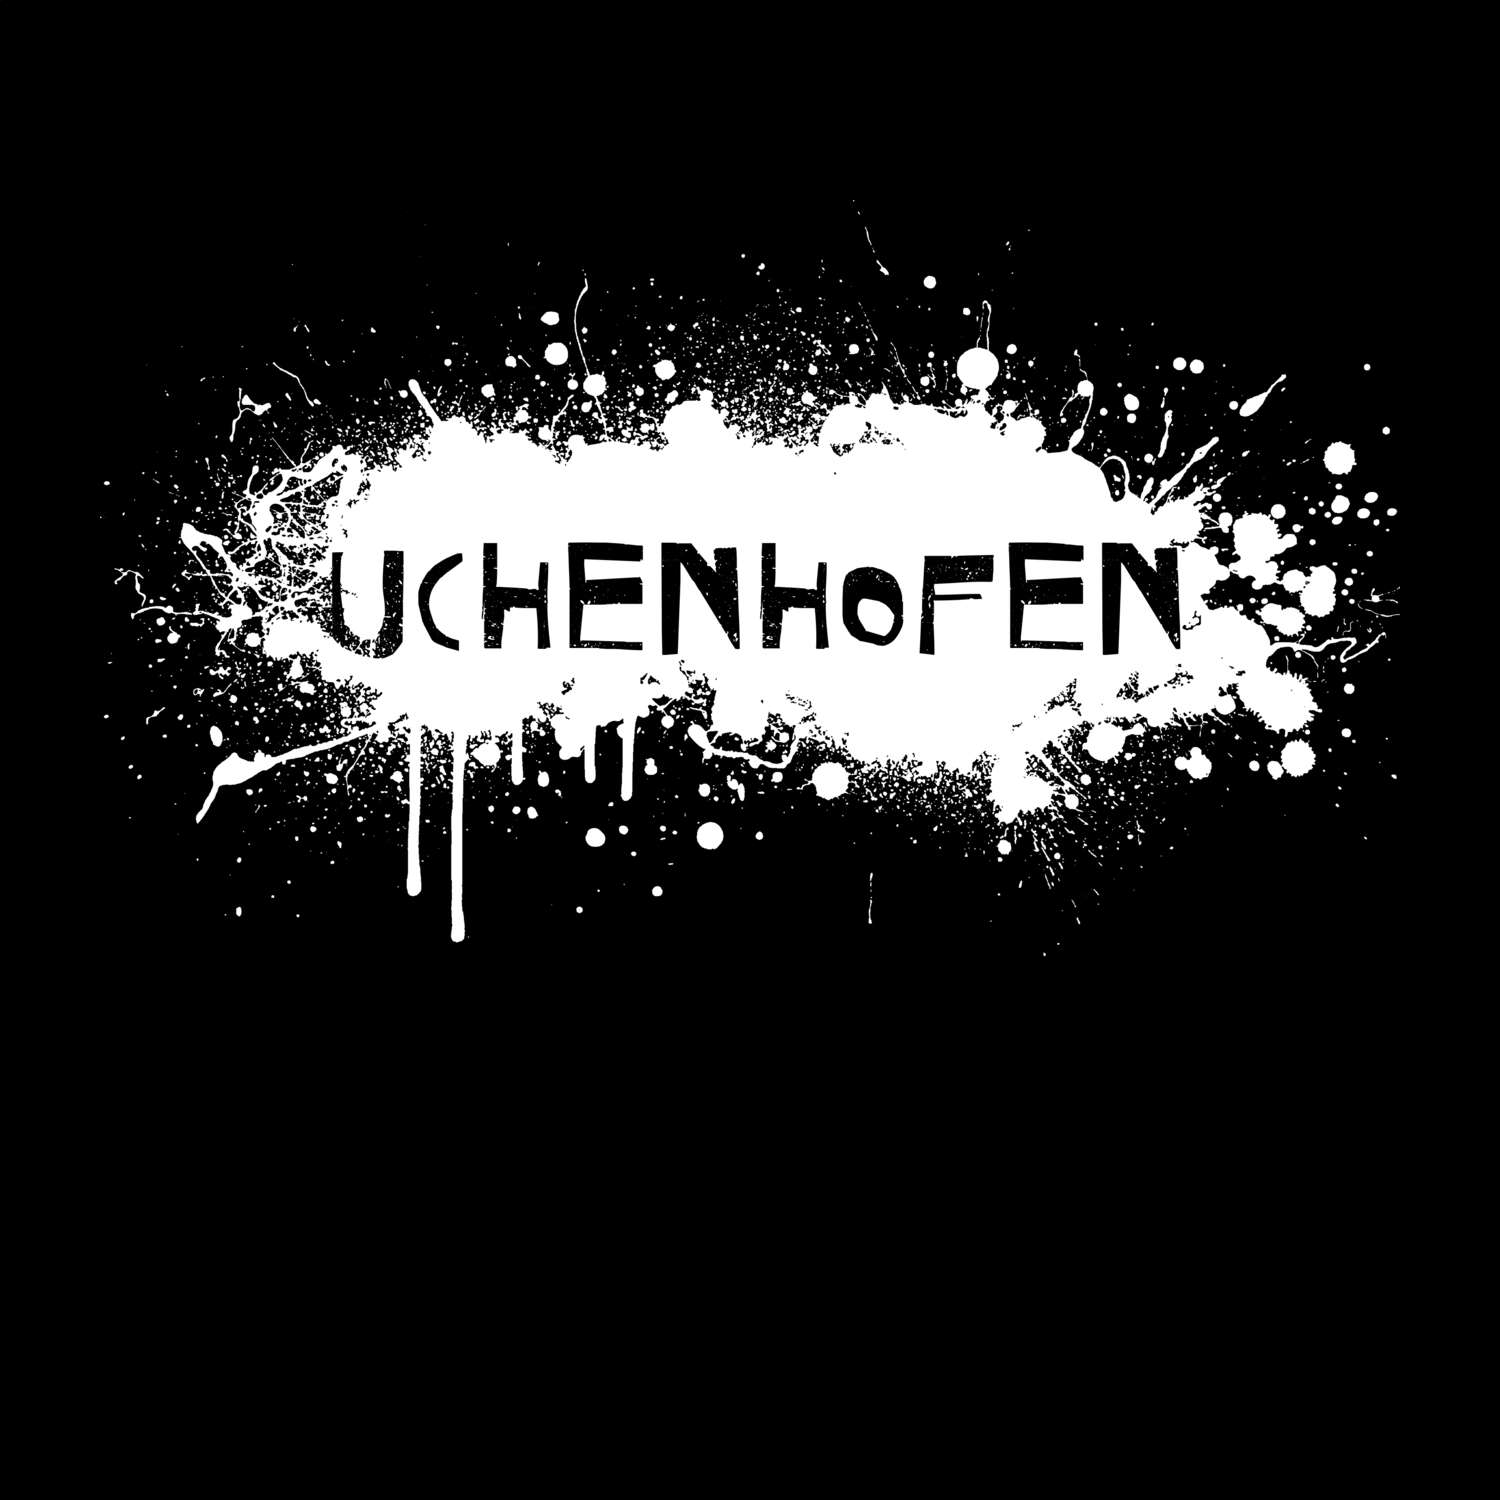 Uchenhofen T-Shirt »Paint Splash Punk«